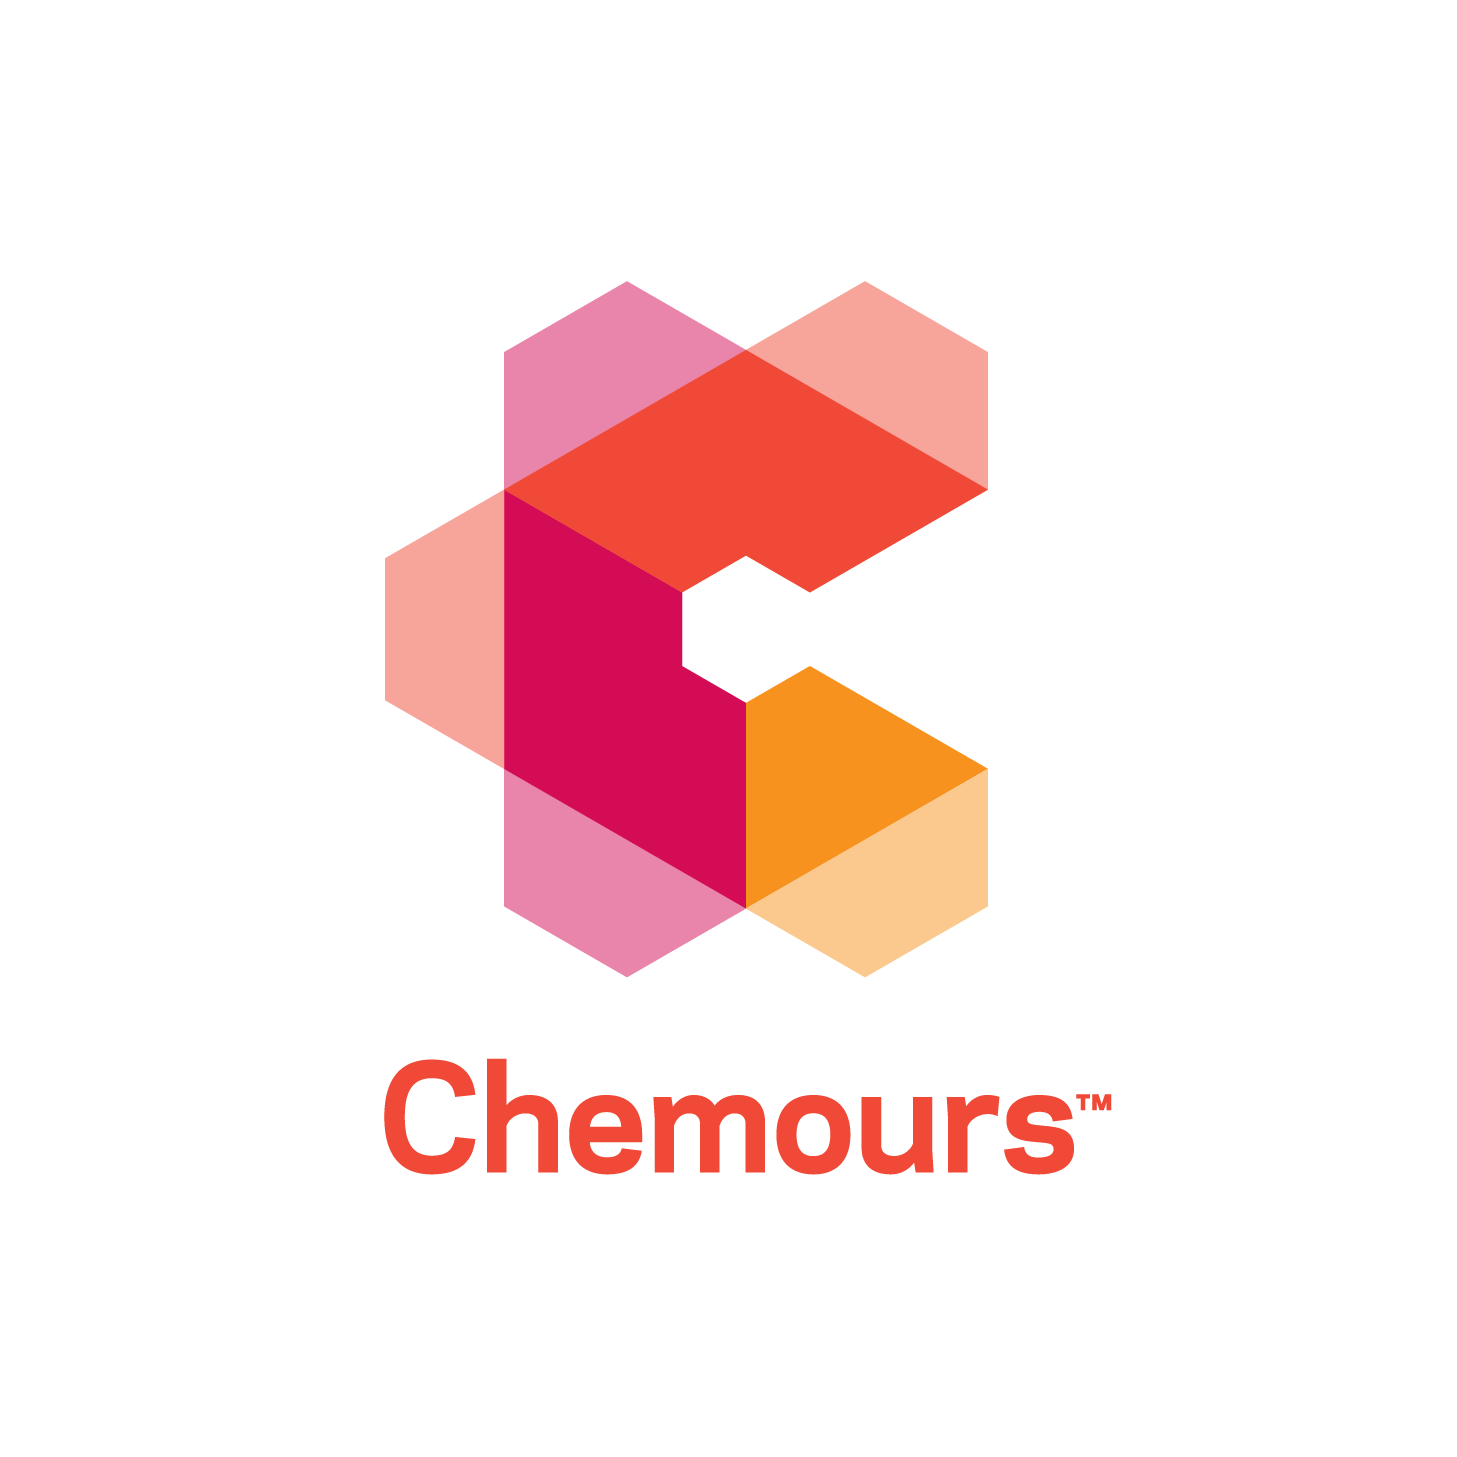 Chemours